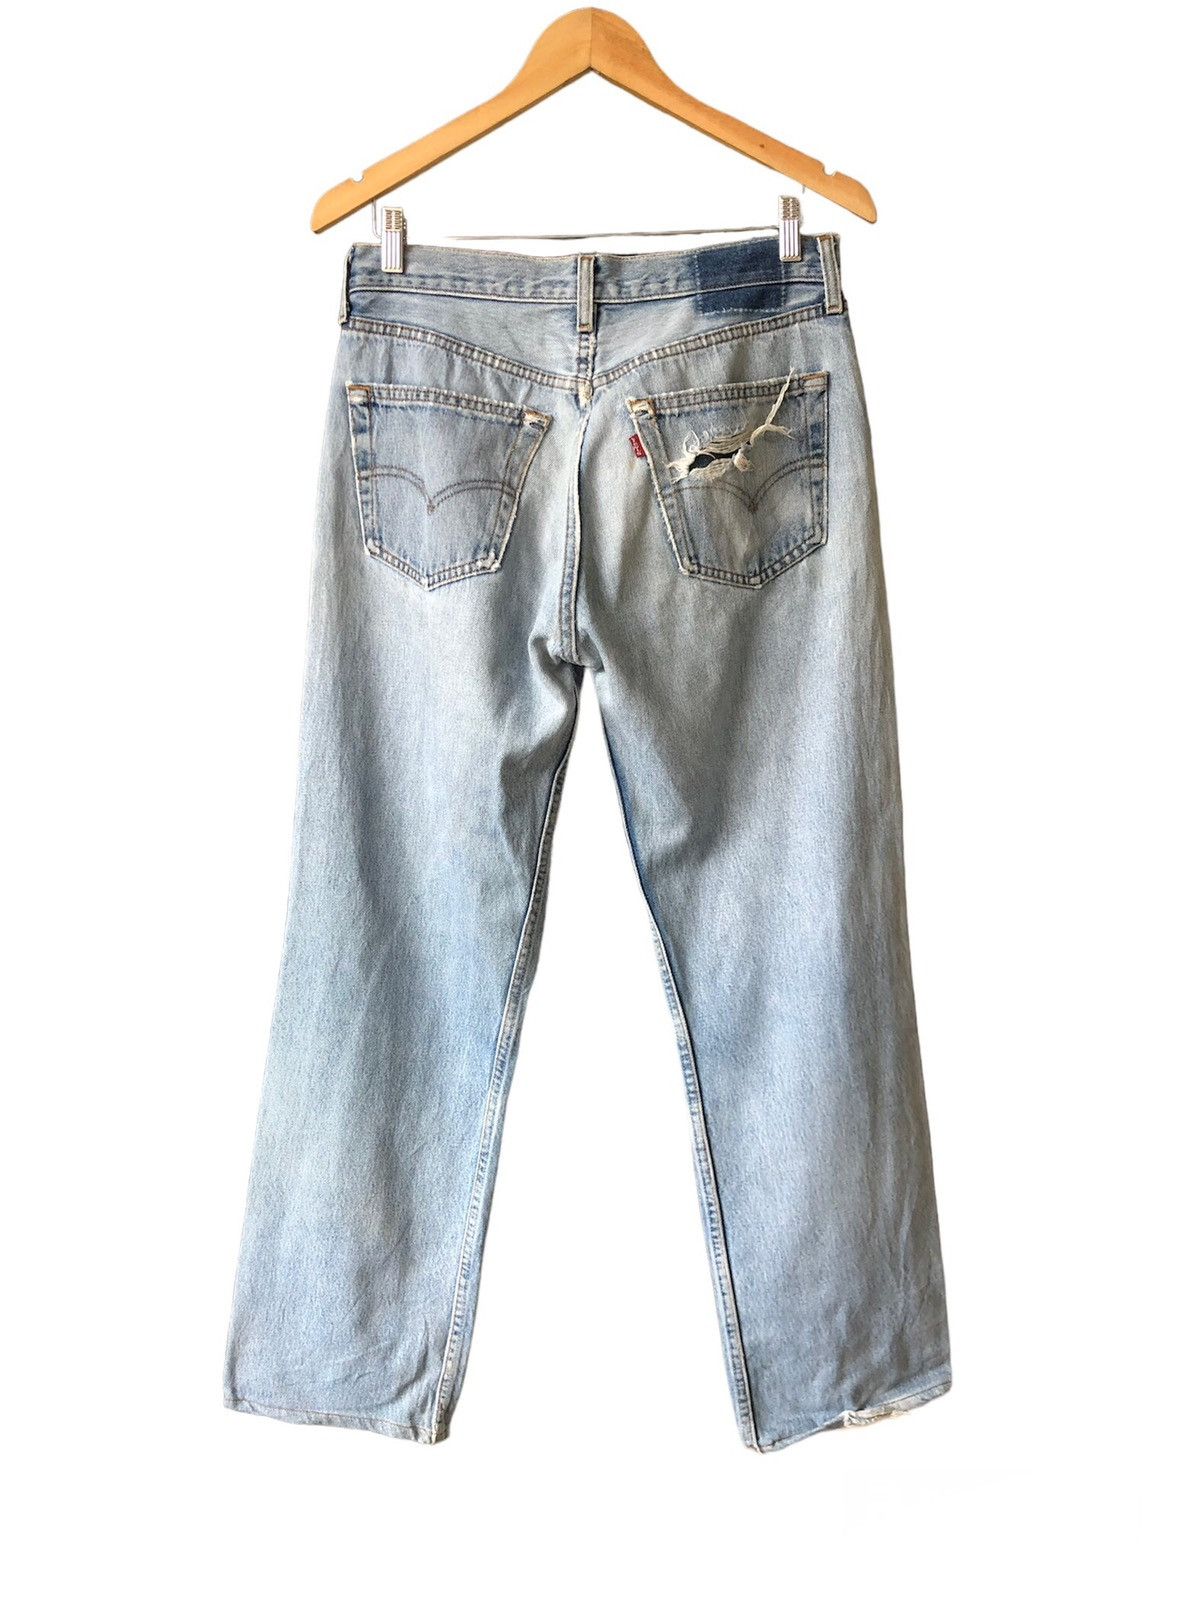 Vintage Rare❗️Vintage 90s Levis 501 Distressed Jeans Like Kapital Size US 30 / EU 46 - 2 Preview